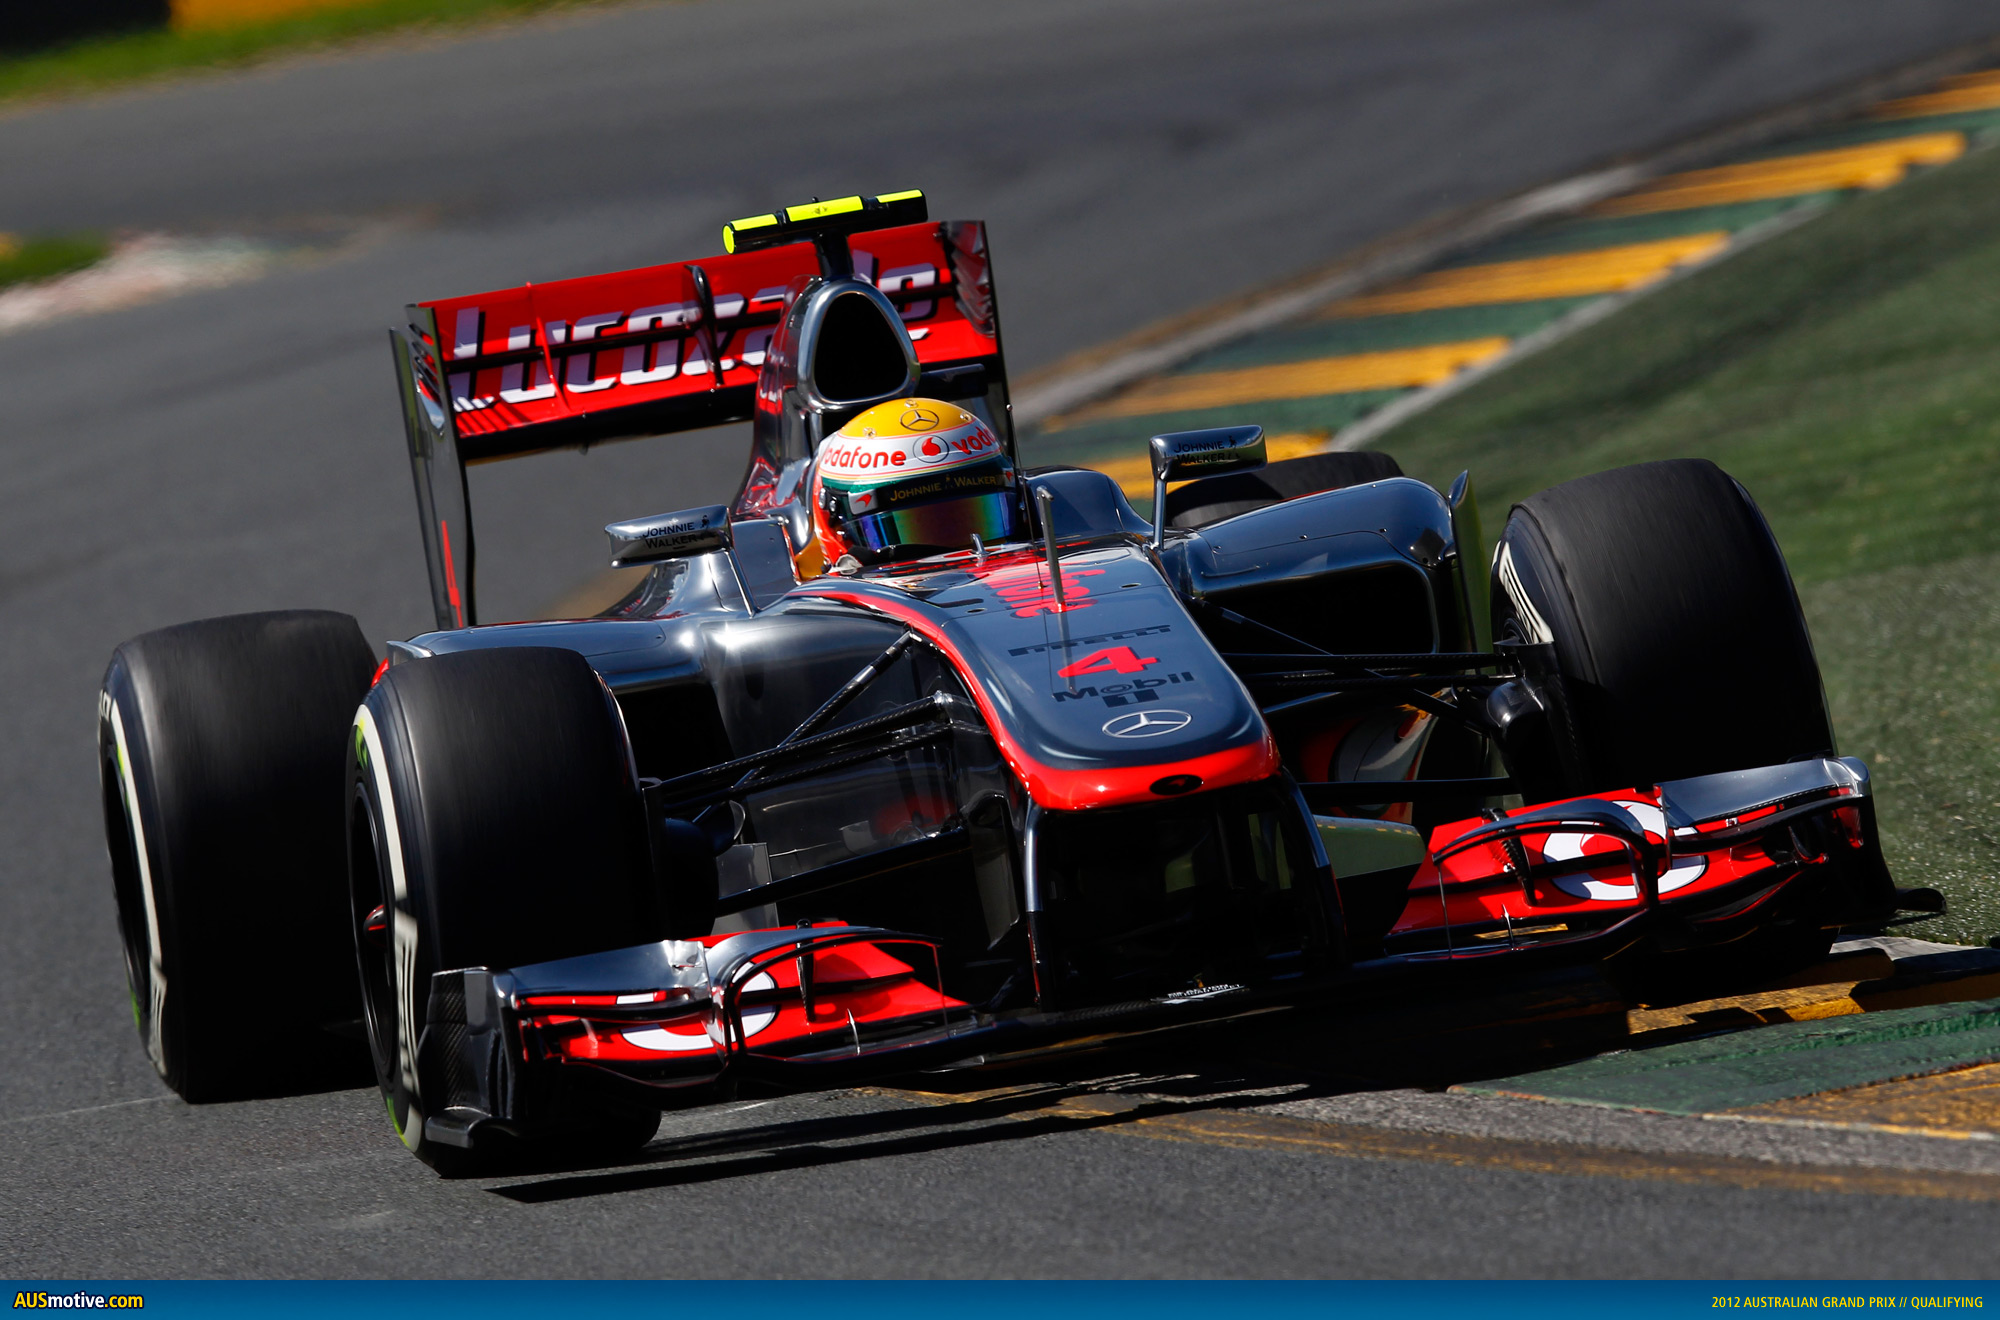 AUSmotive.com » 2012 Australian GP: Qualifying conference